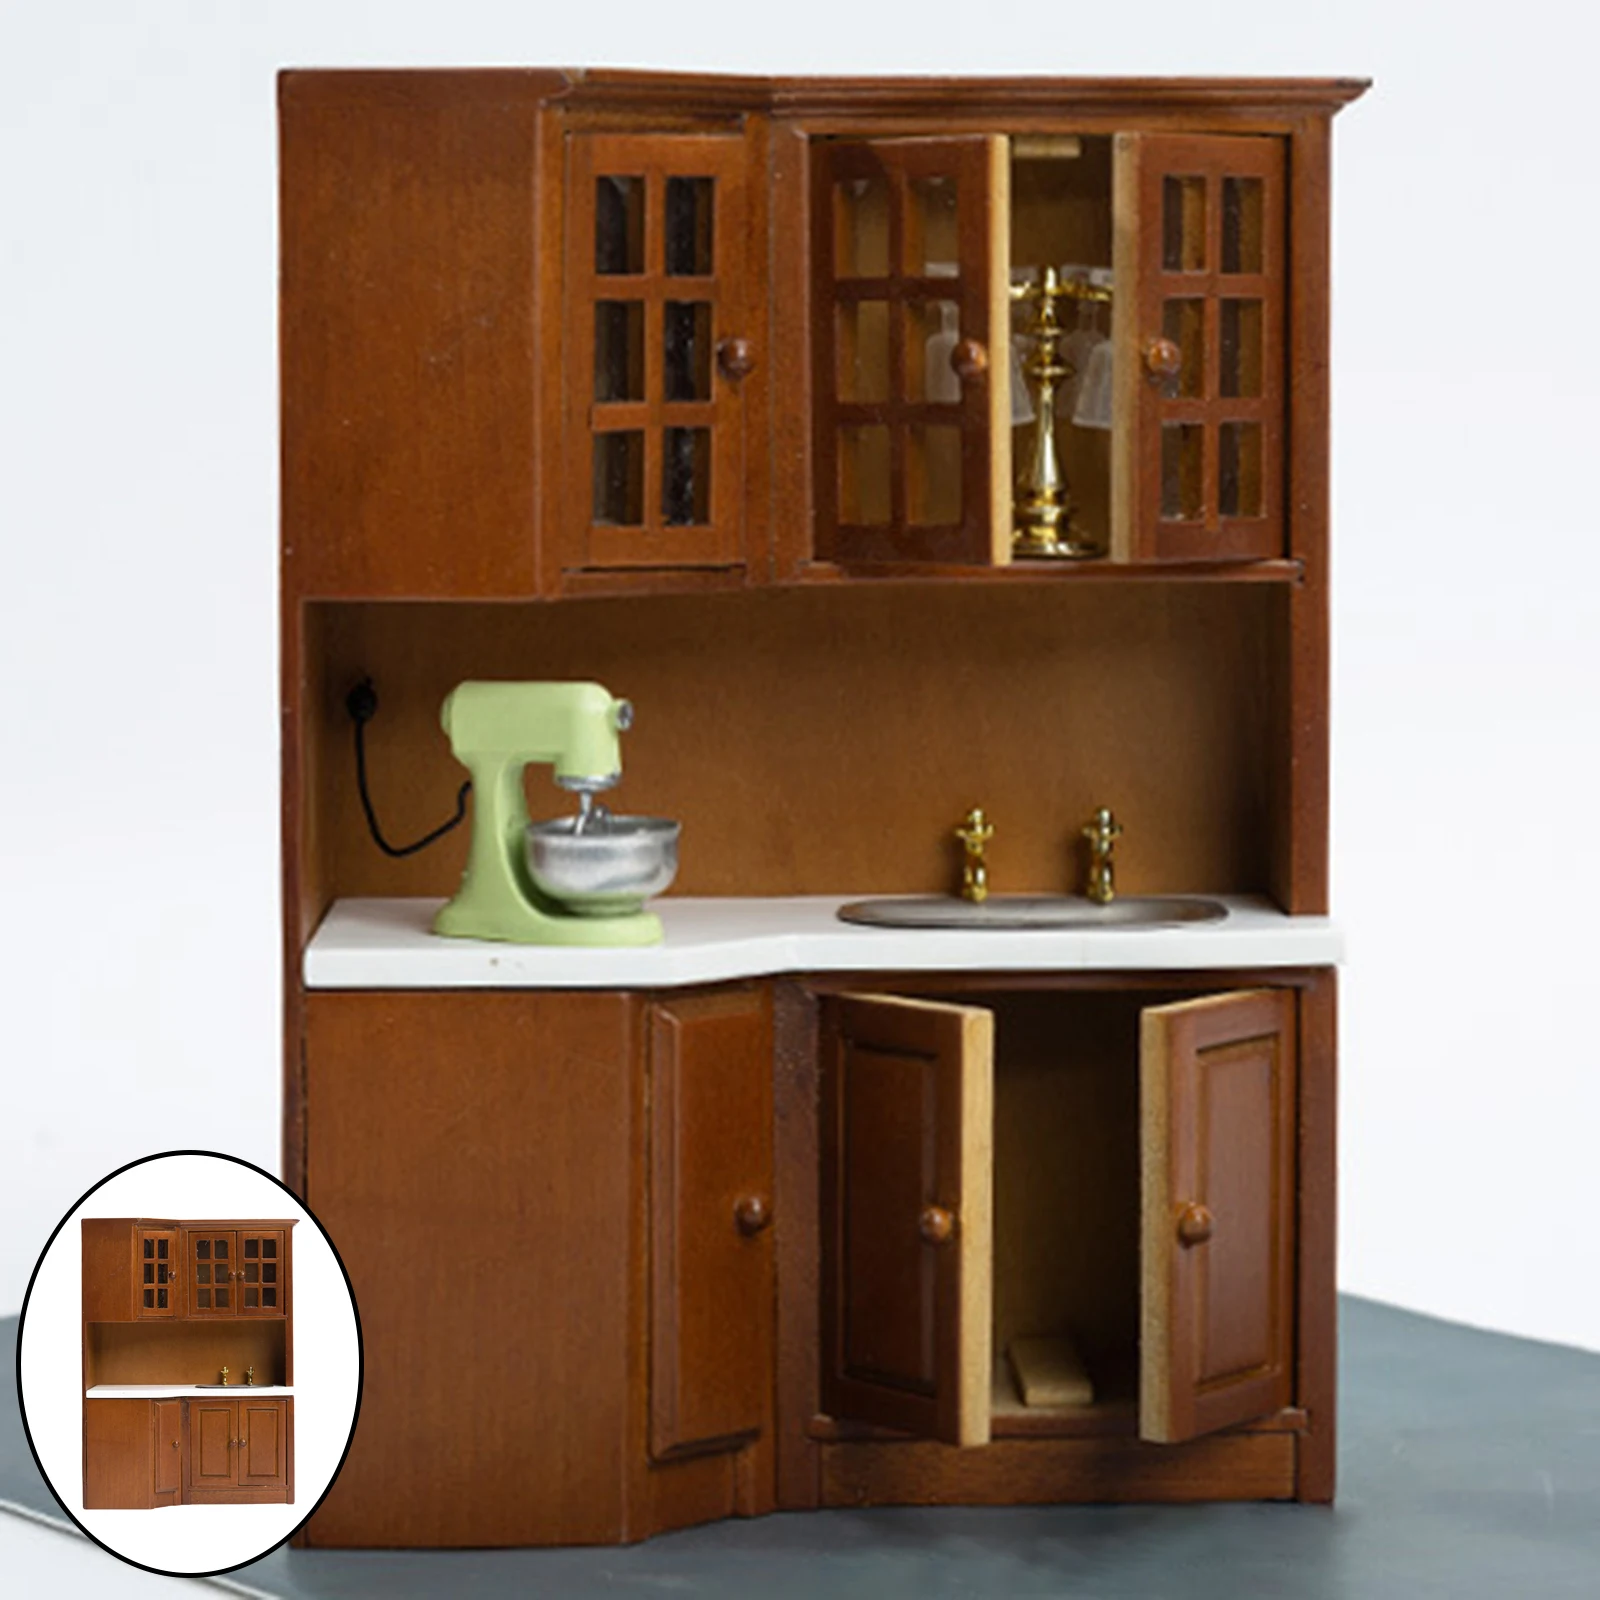 Wooden Dollhouse Wash Basin Cabinet Kitchen Sink Bathroom Sink Cabinet Wash Basin Furniture for 1/12 Doll House Decor Accessory